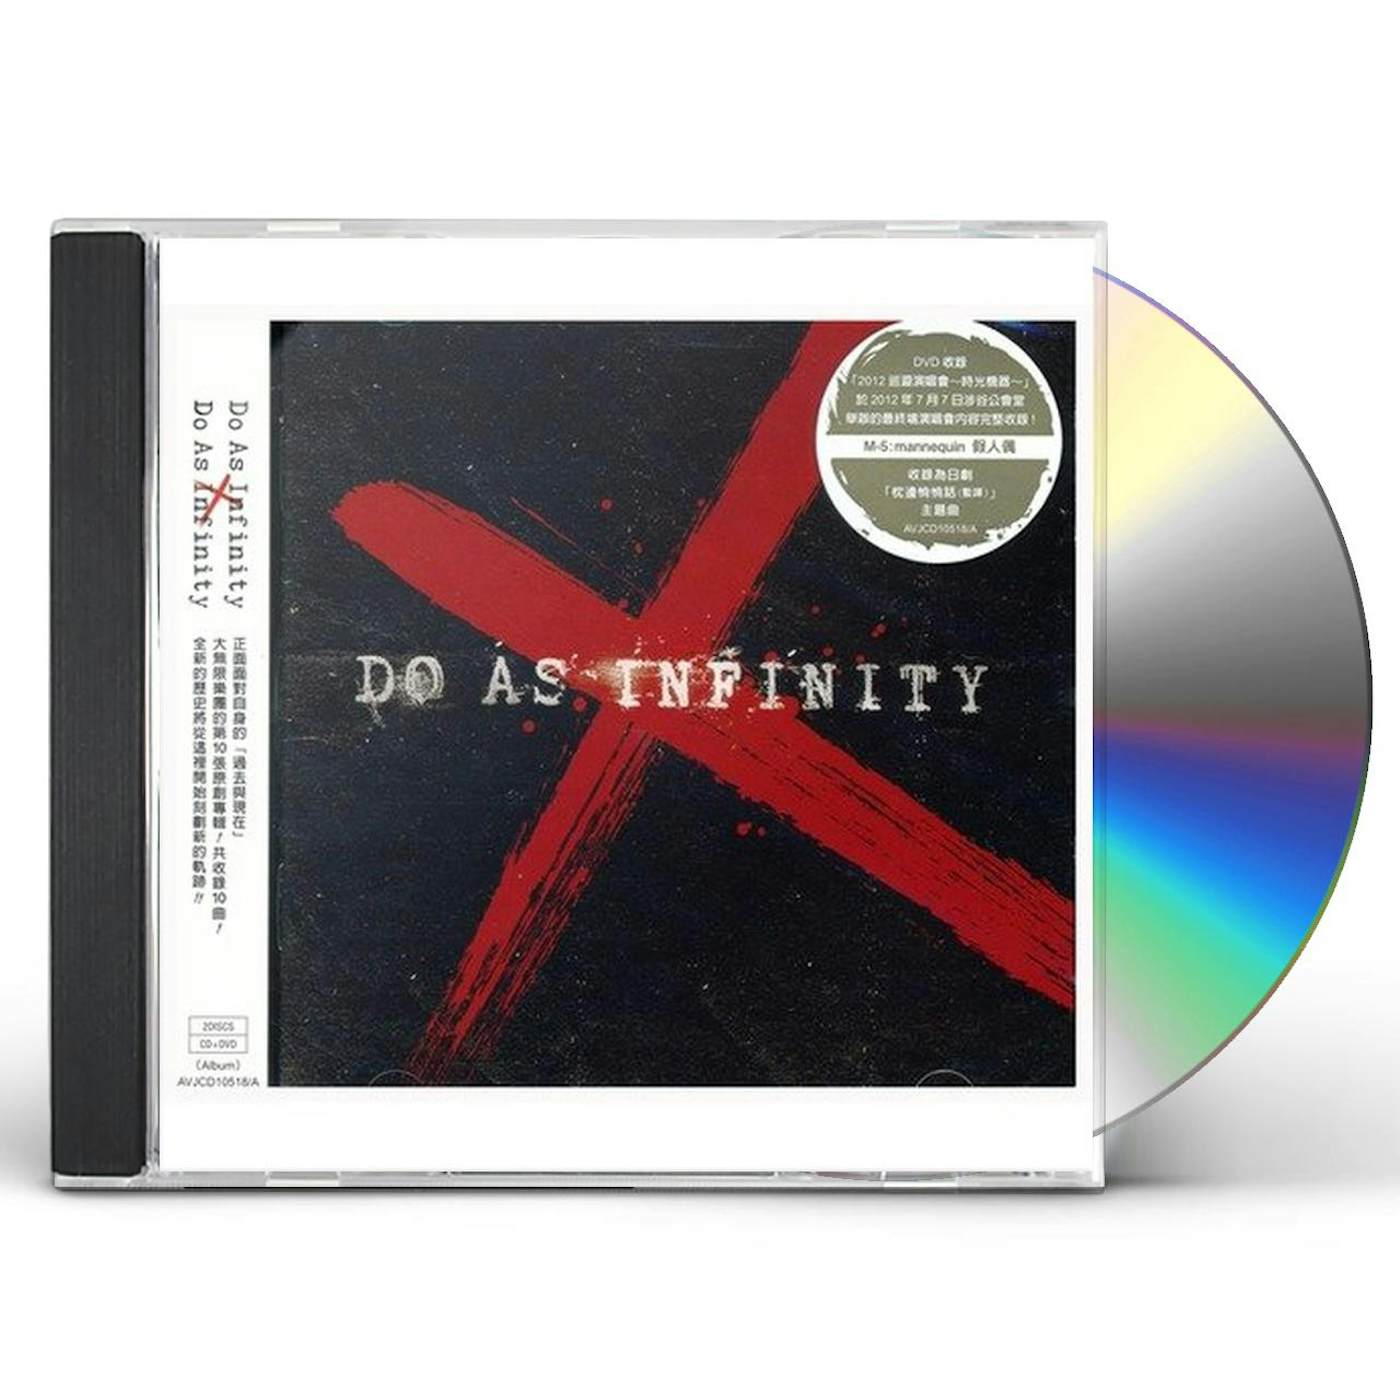 DO AS INFINITY X UMLIMITED 10 ALBUMS CD